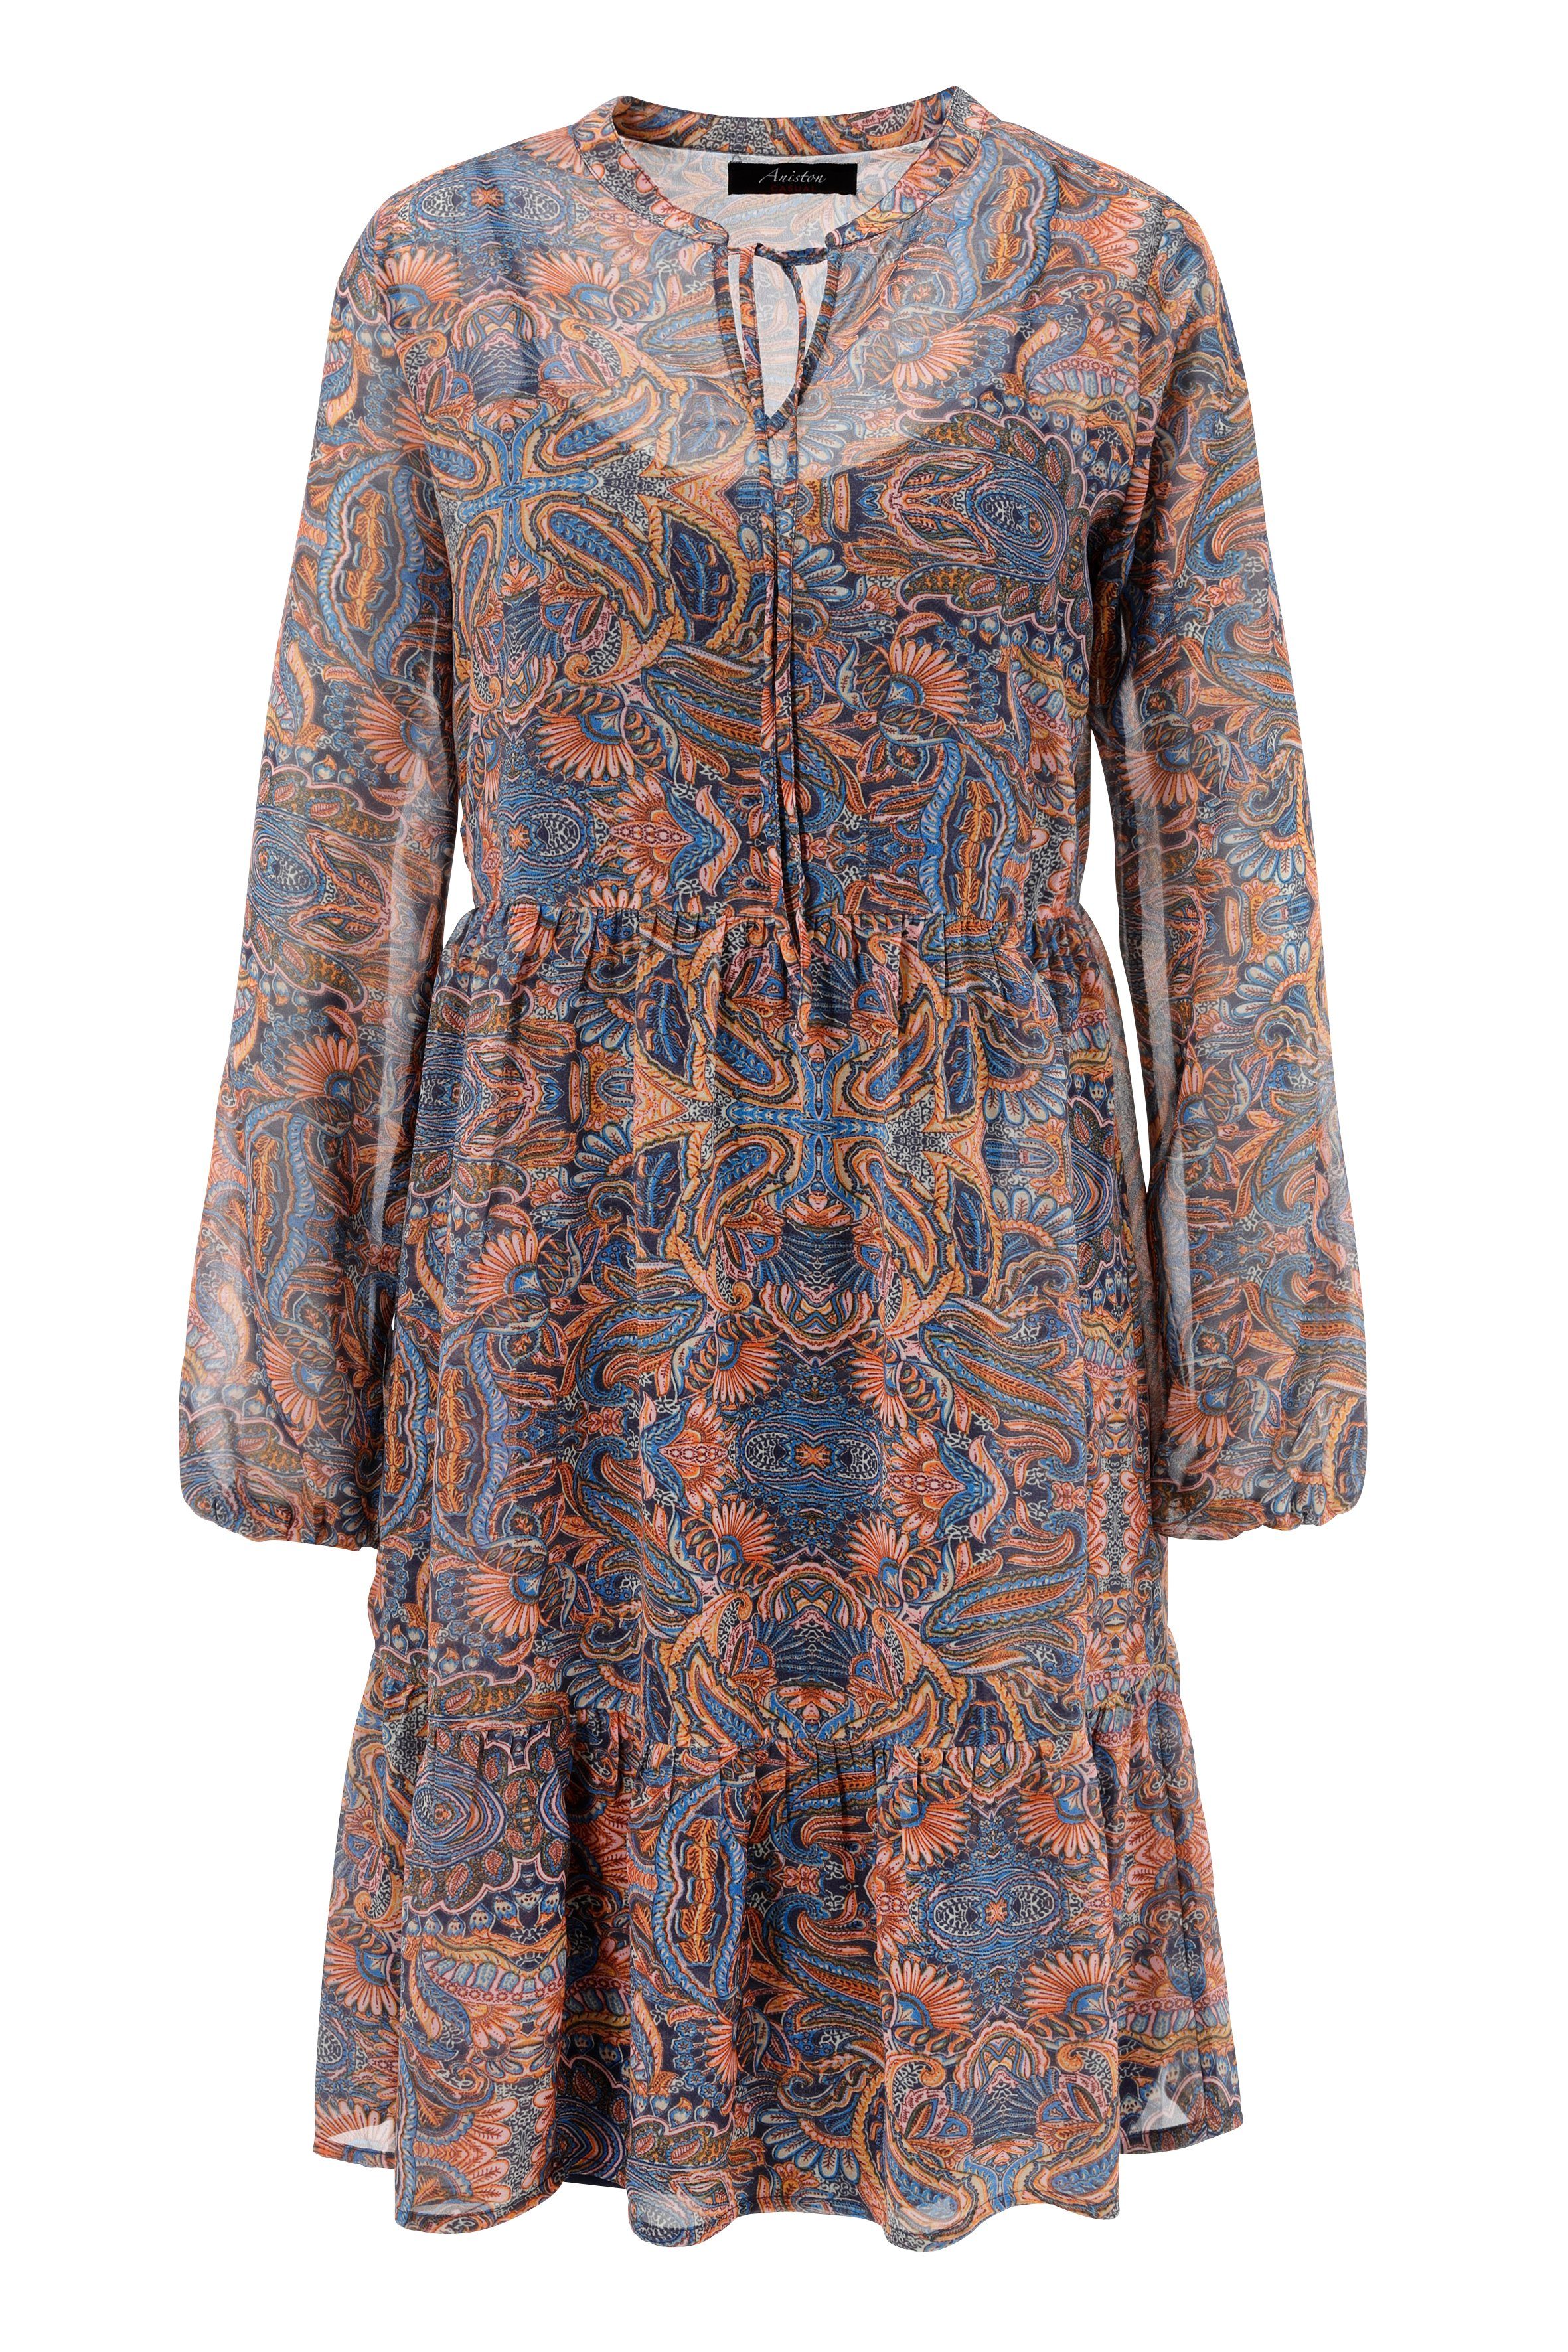 Aniston CASUAL Blusenkleid mit bedruckt Paisley-Muster phantasievollem